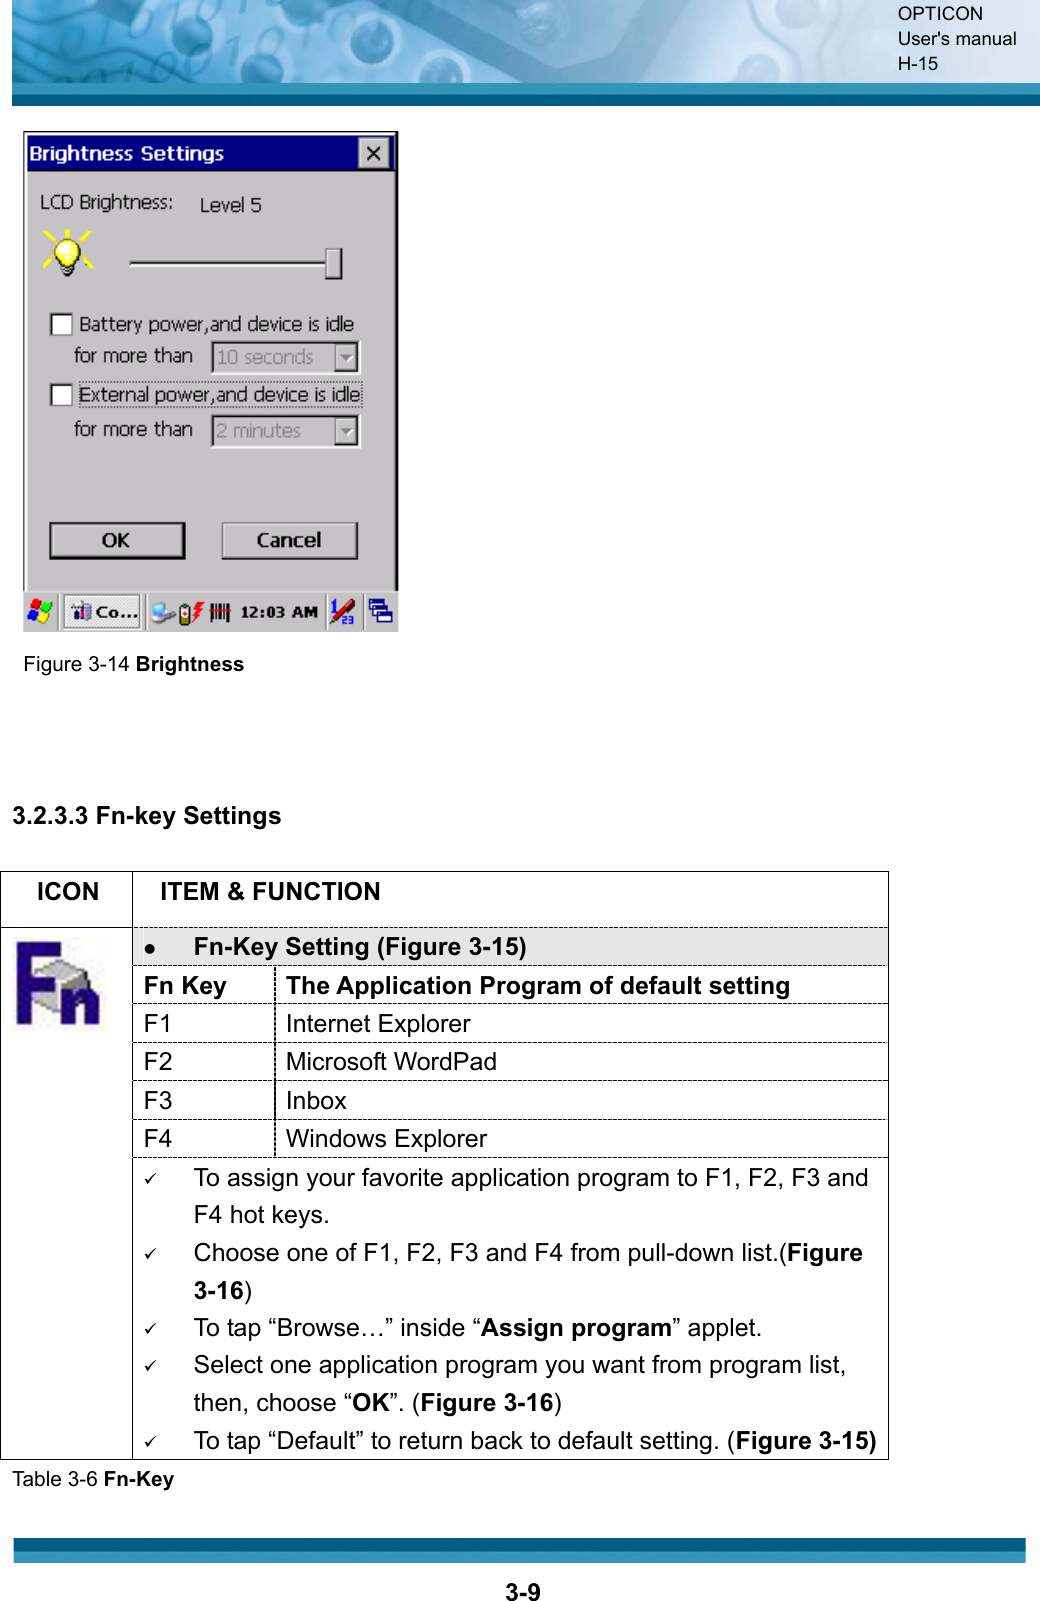 OPTICON User&apos;s manual H-153-9Figure 3-14 Brightness3.2.3.3 Fn-key Settings ICON ITEM &amp; FUNCTION zFn-Key Setting (Figure 3-15)Fn Key  The Application Program of default setting F1 Internet Explorer F2 Microsoft WordPad F3 Inbox F4 Windows Explorer 9To assign your favorite application program to F1, F2, F3 and F4 hot keys.9Choose one of F1, F2, F3 and F4 from pull-down list.(Figure3-16)9To tap “Browse…” inside “Assign program” applet.9Select one application program you want from program list, then, choose “OK”. (Figure 3-16)9To tap “Default” to return back to default setting. (Figure 3-15)Table 3-6 Fn-Key